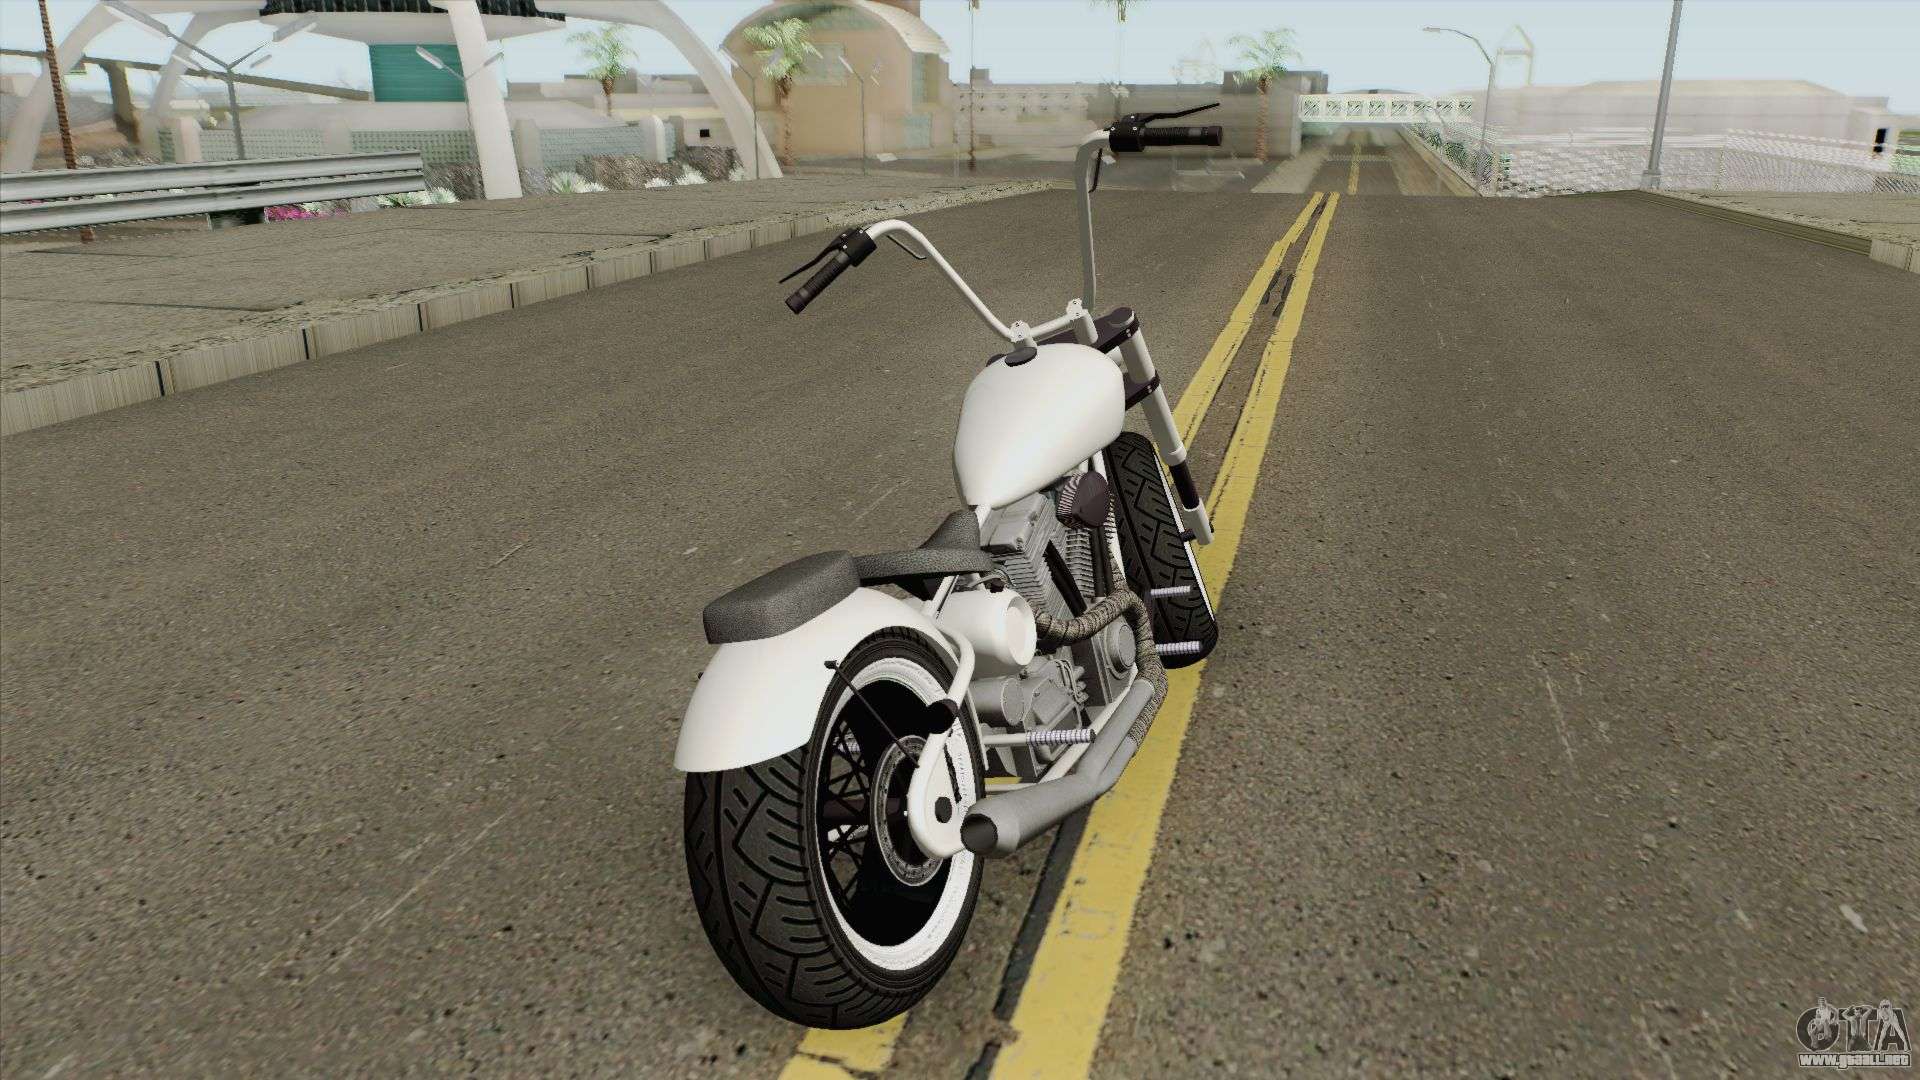 Western Motorcycle Zombie Chopper GTA V para GTA San Andreas